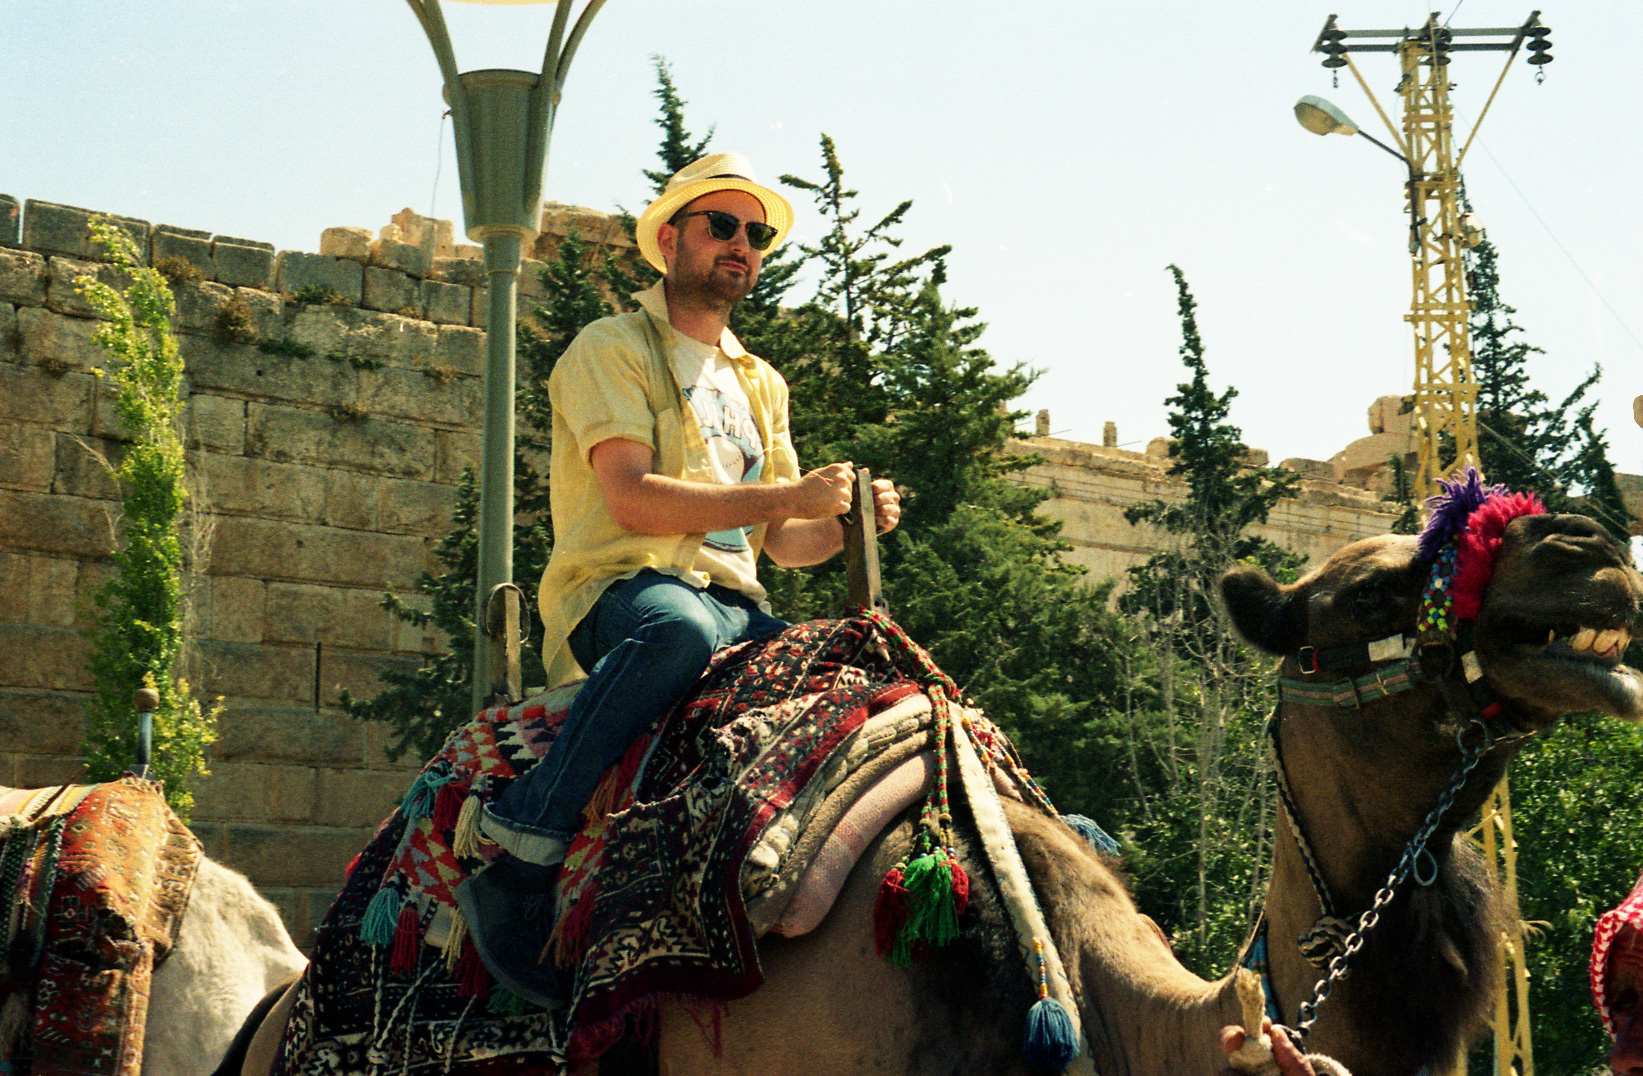 a man riding a camel wearing an elaborate head piece